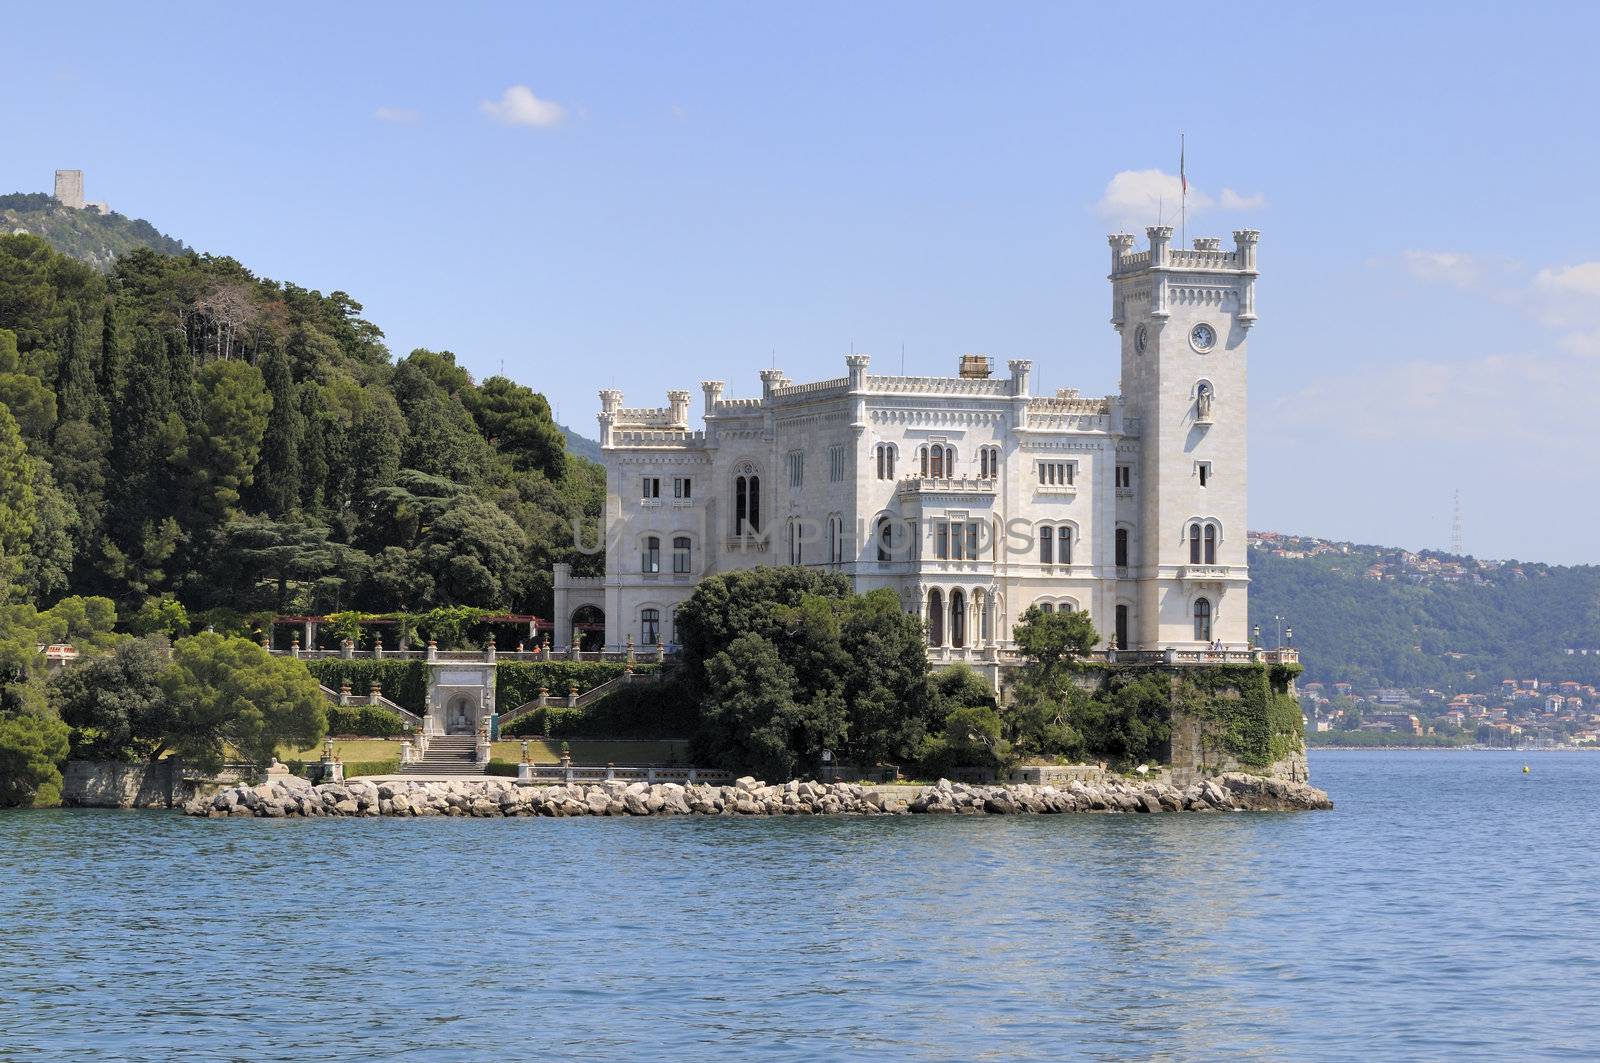 Miramare Castle in Trieste (Italy) by lebanmax